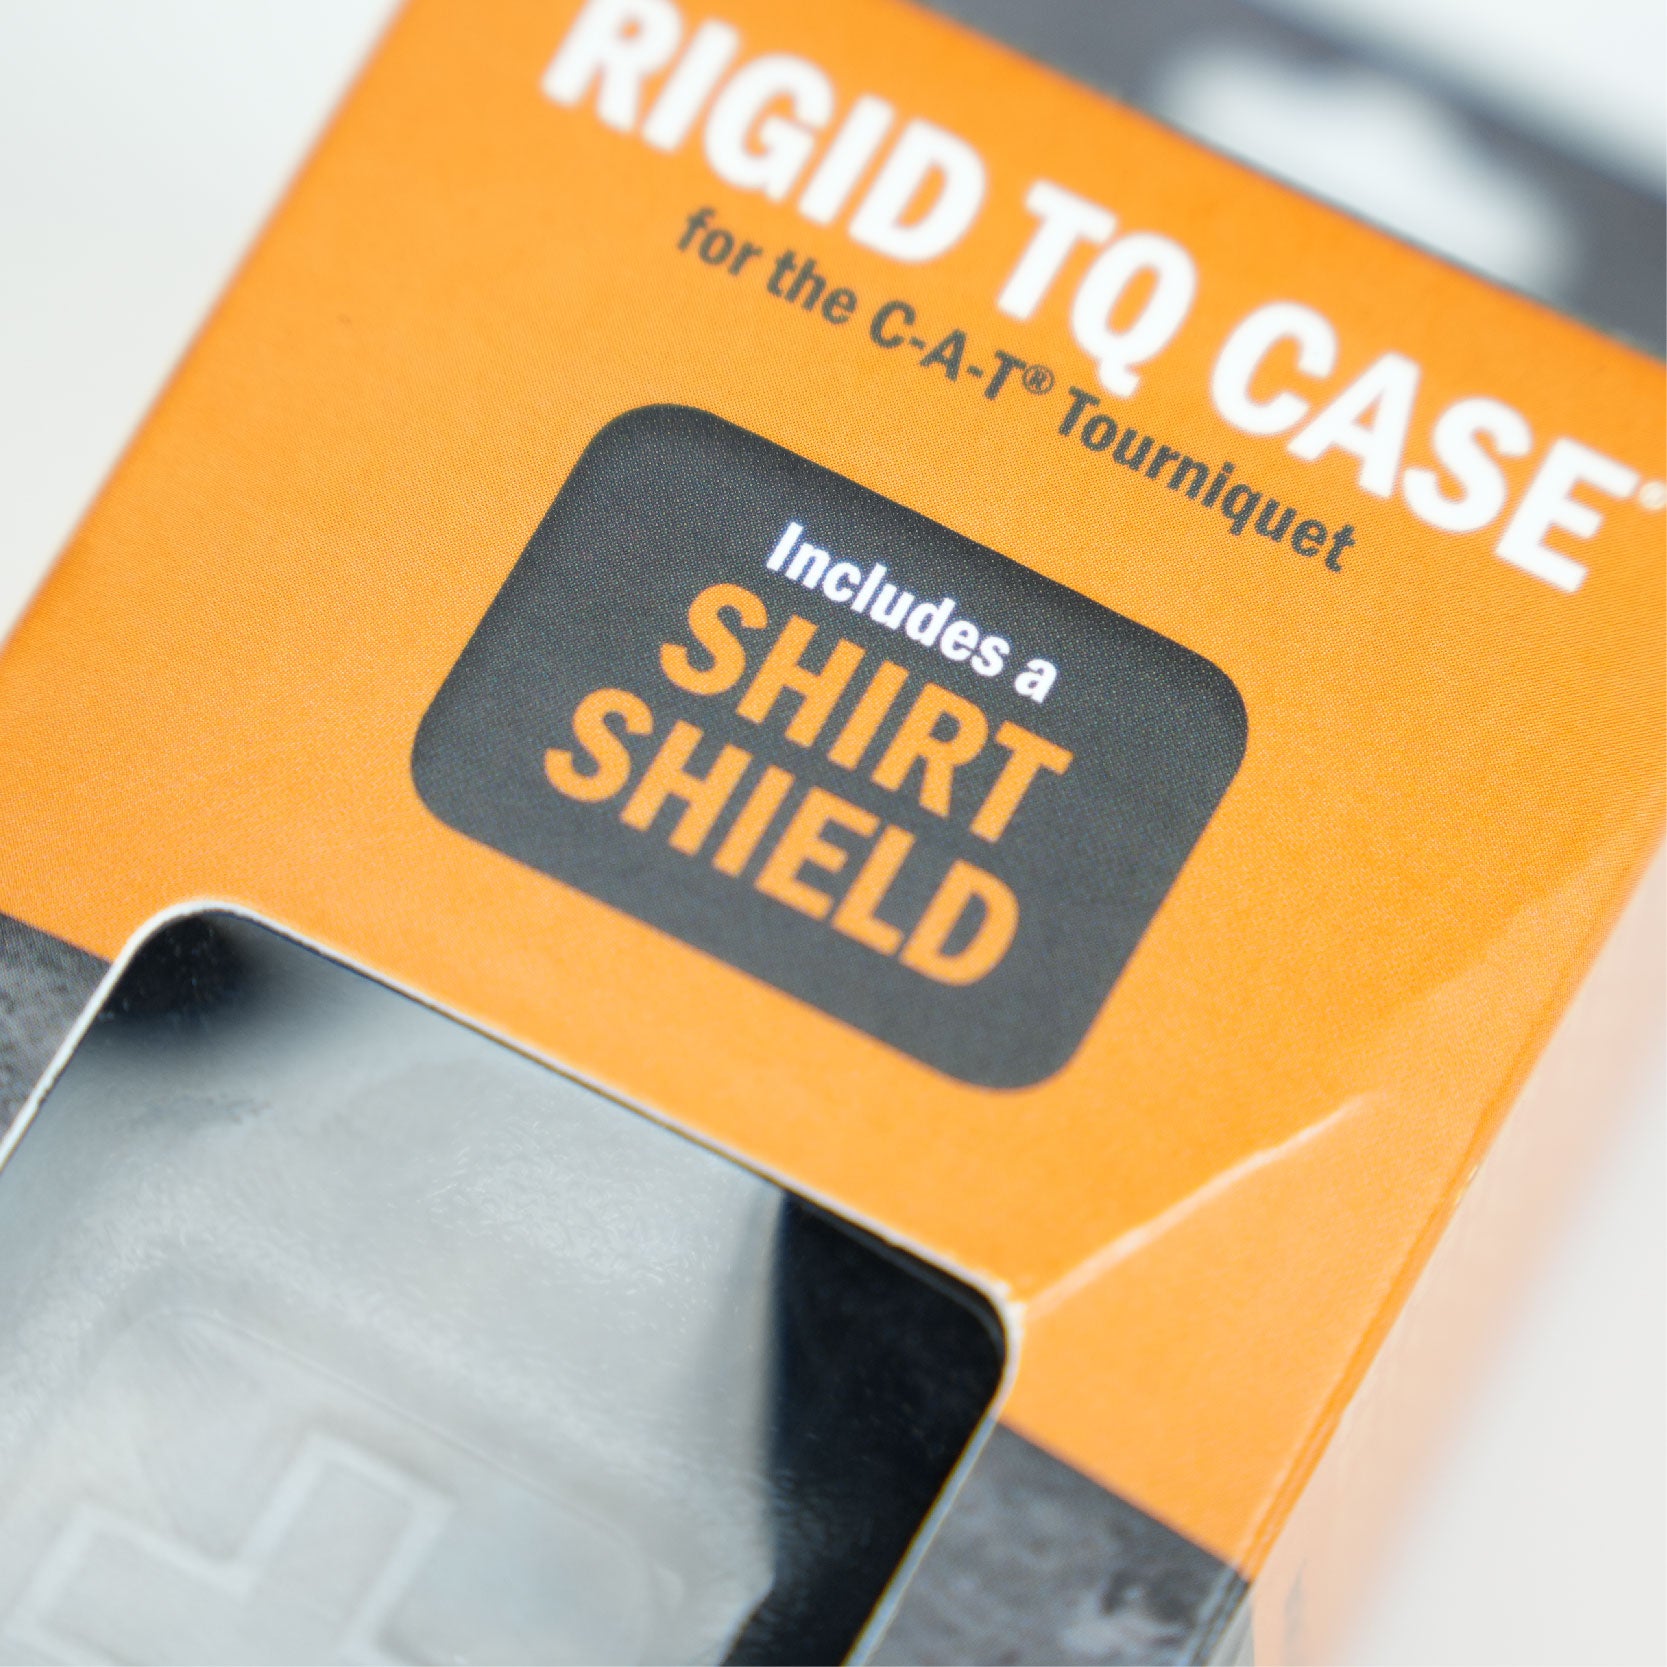 North American Rescue Rigid Gen 7 Tourniquet Cases with Shirt Shield